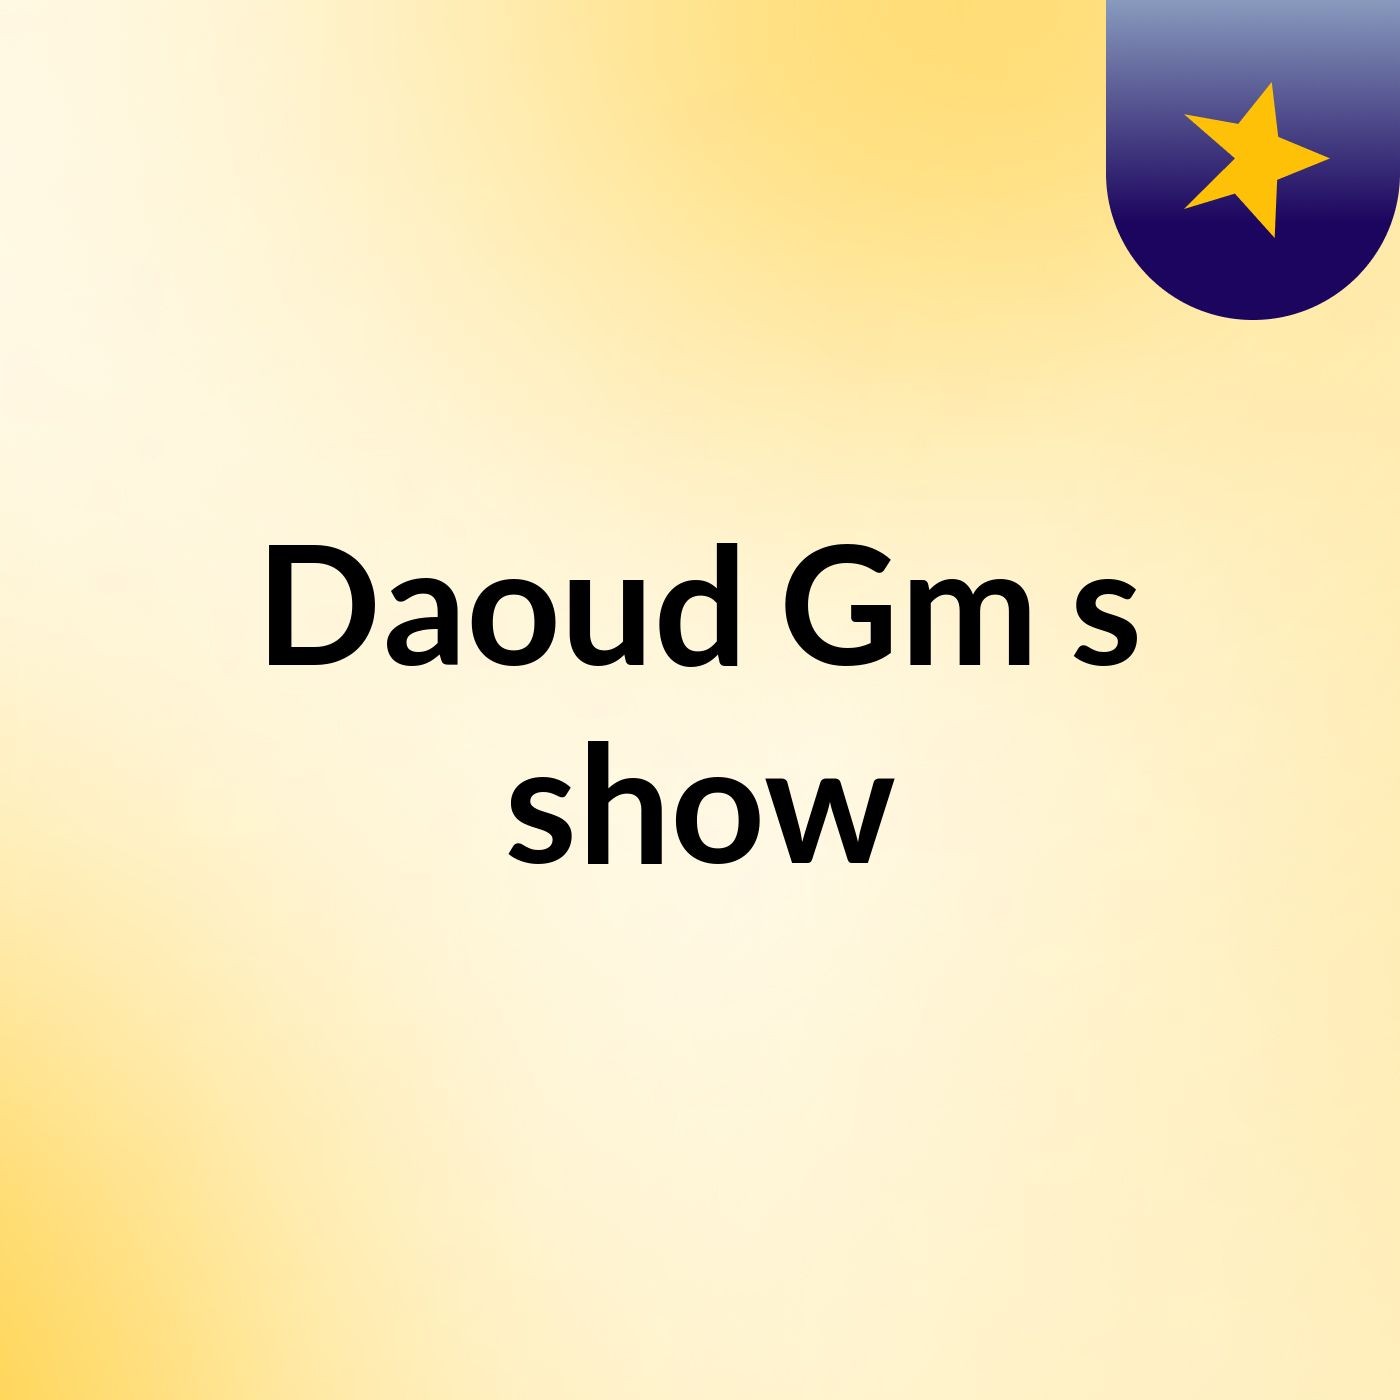 Daoud Gm's show